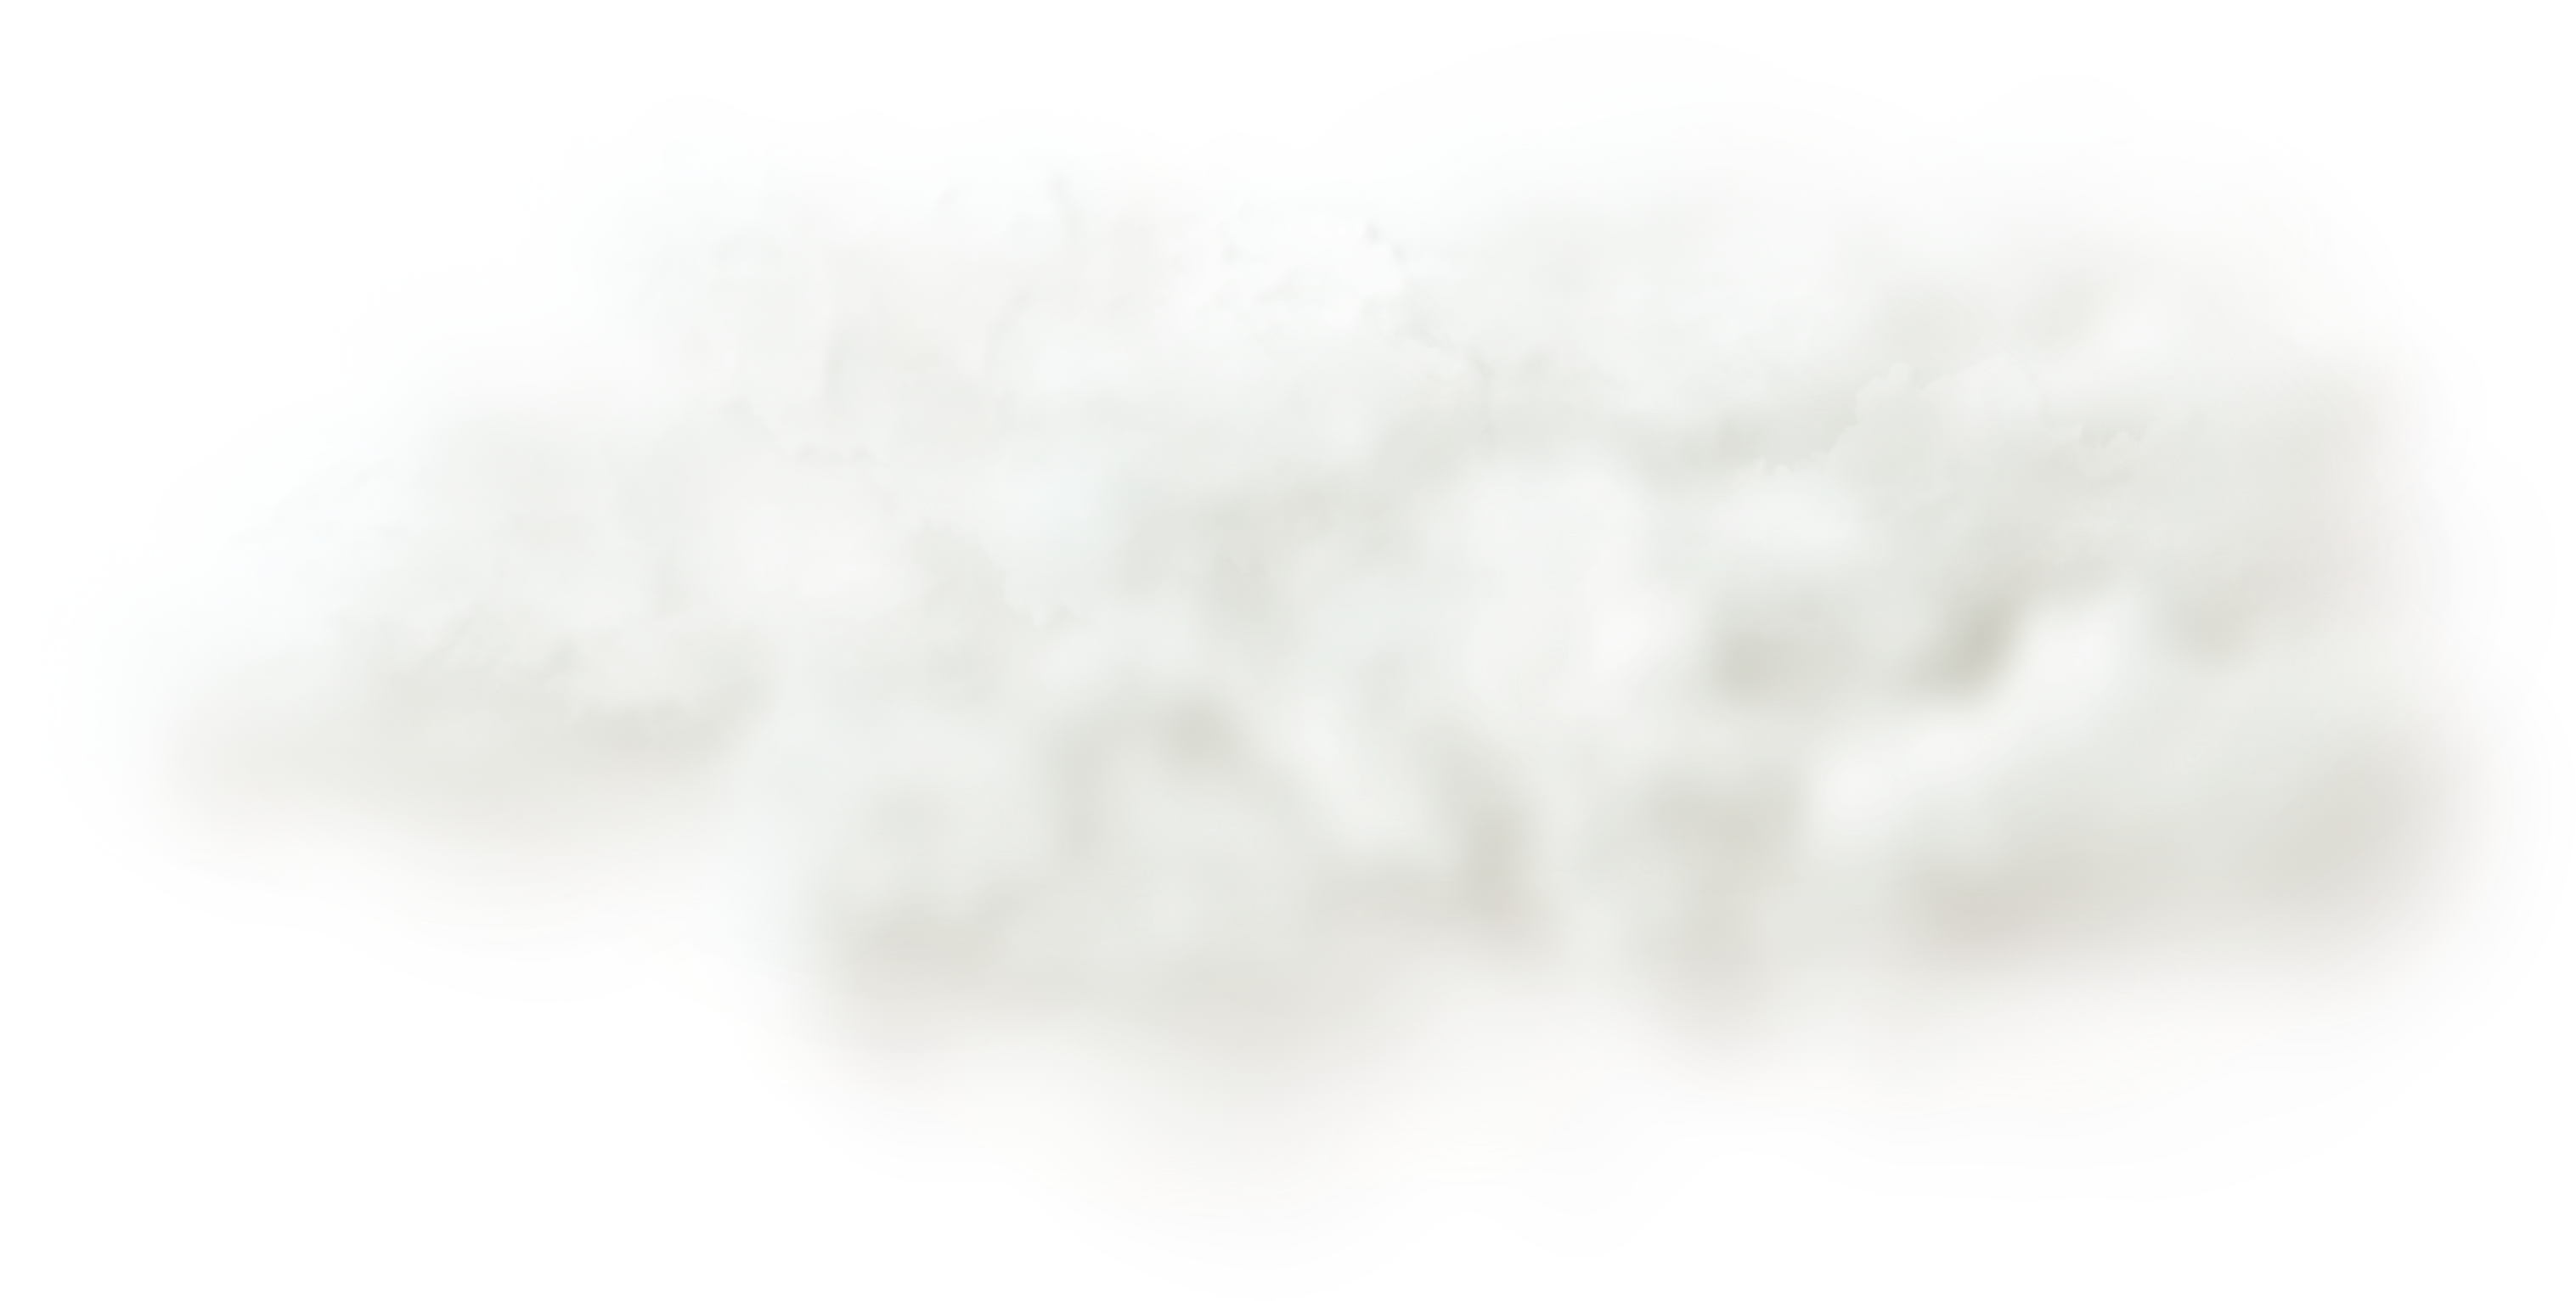 Cotton Clouds PNG Transparent Images Free Download